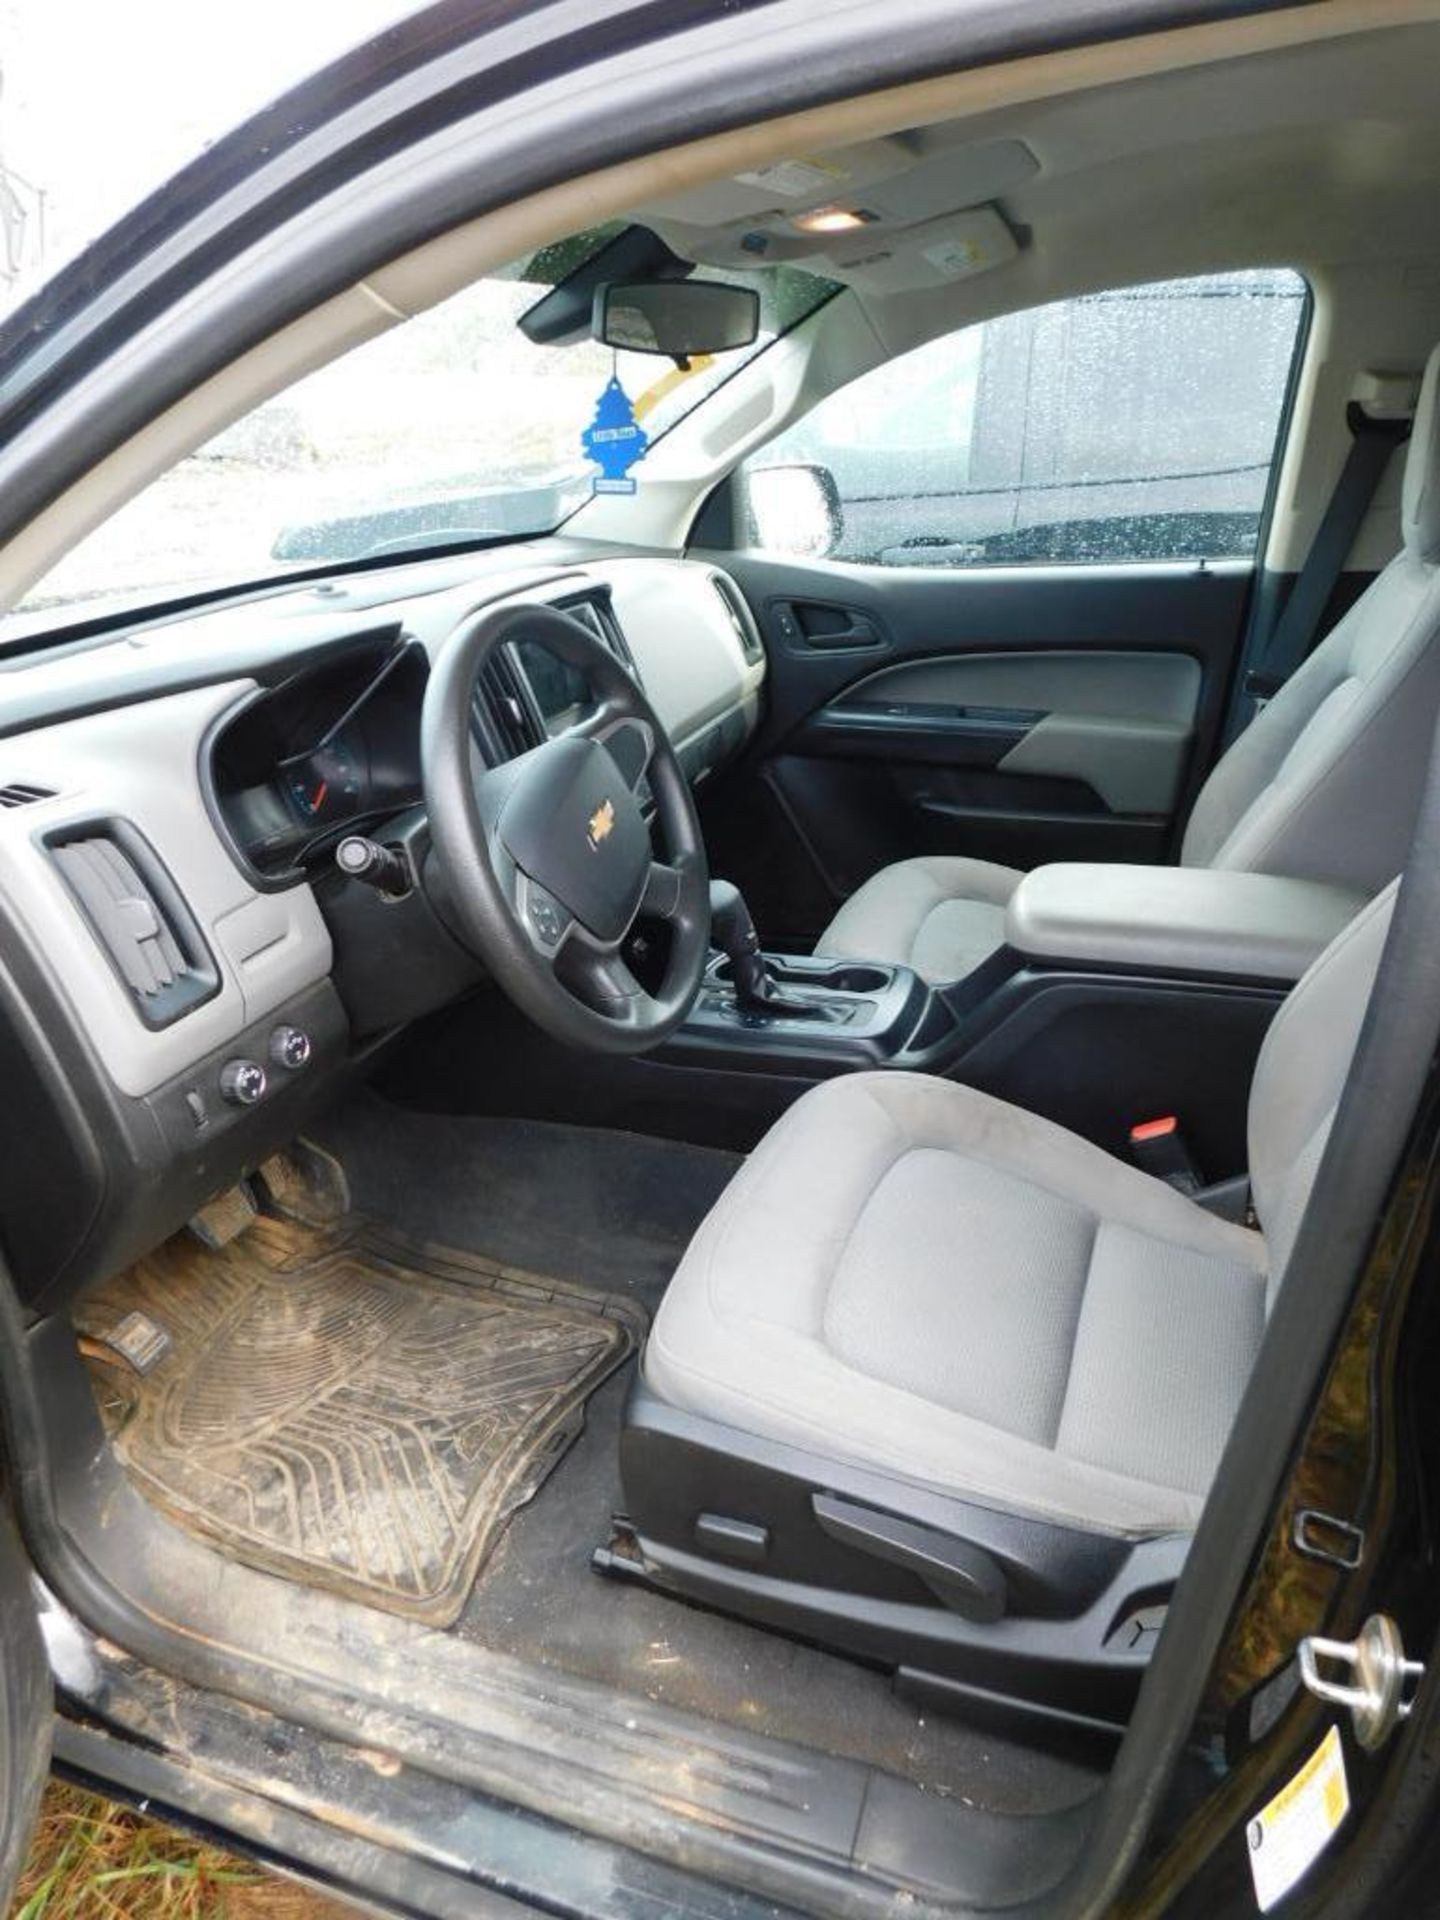 2019 Chevy Colorado Crew Cab, 4-Wheel Drive, 3.6 Liter, V6, Gasoline Motor, Auto, 5' Bed, 87,741 Mil - Image 9 of 11